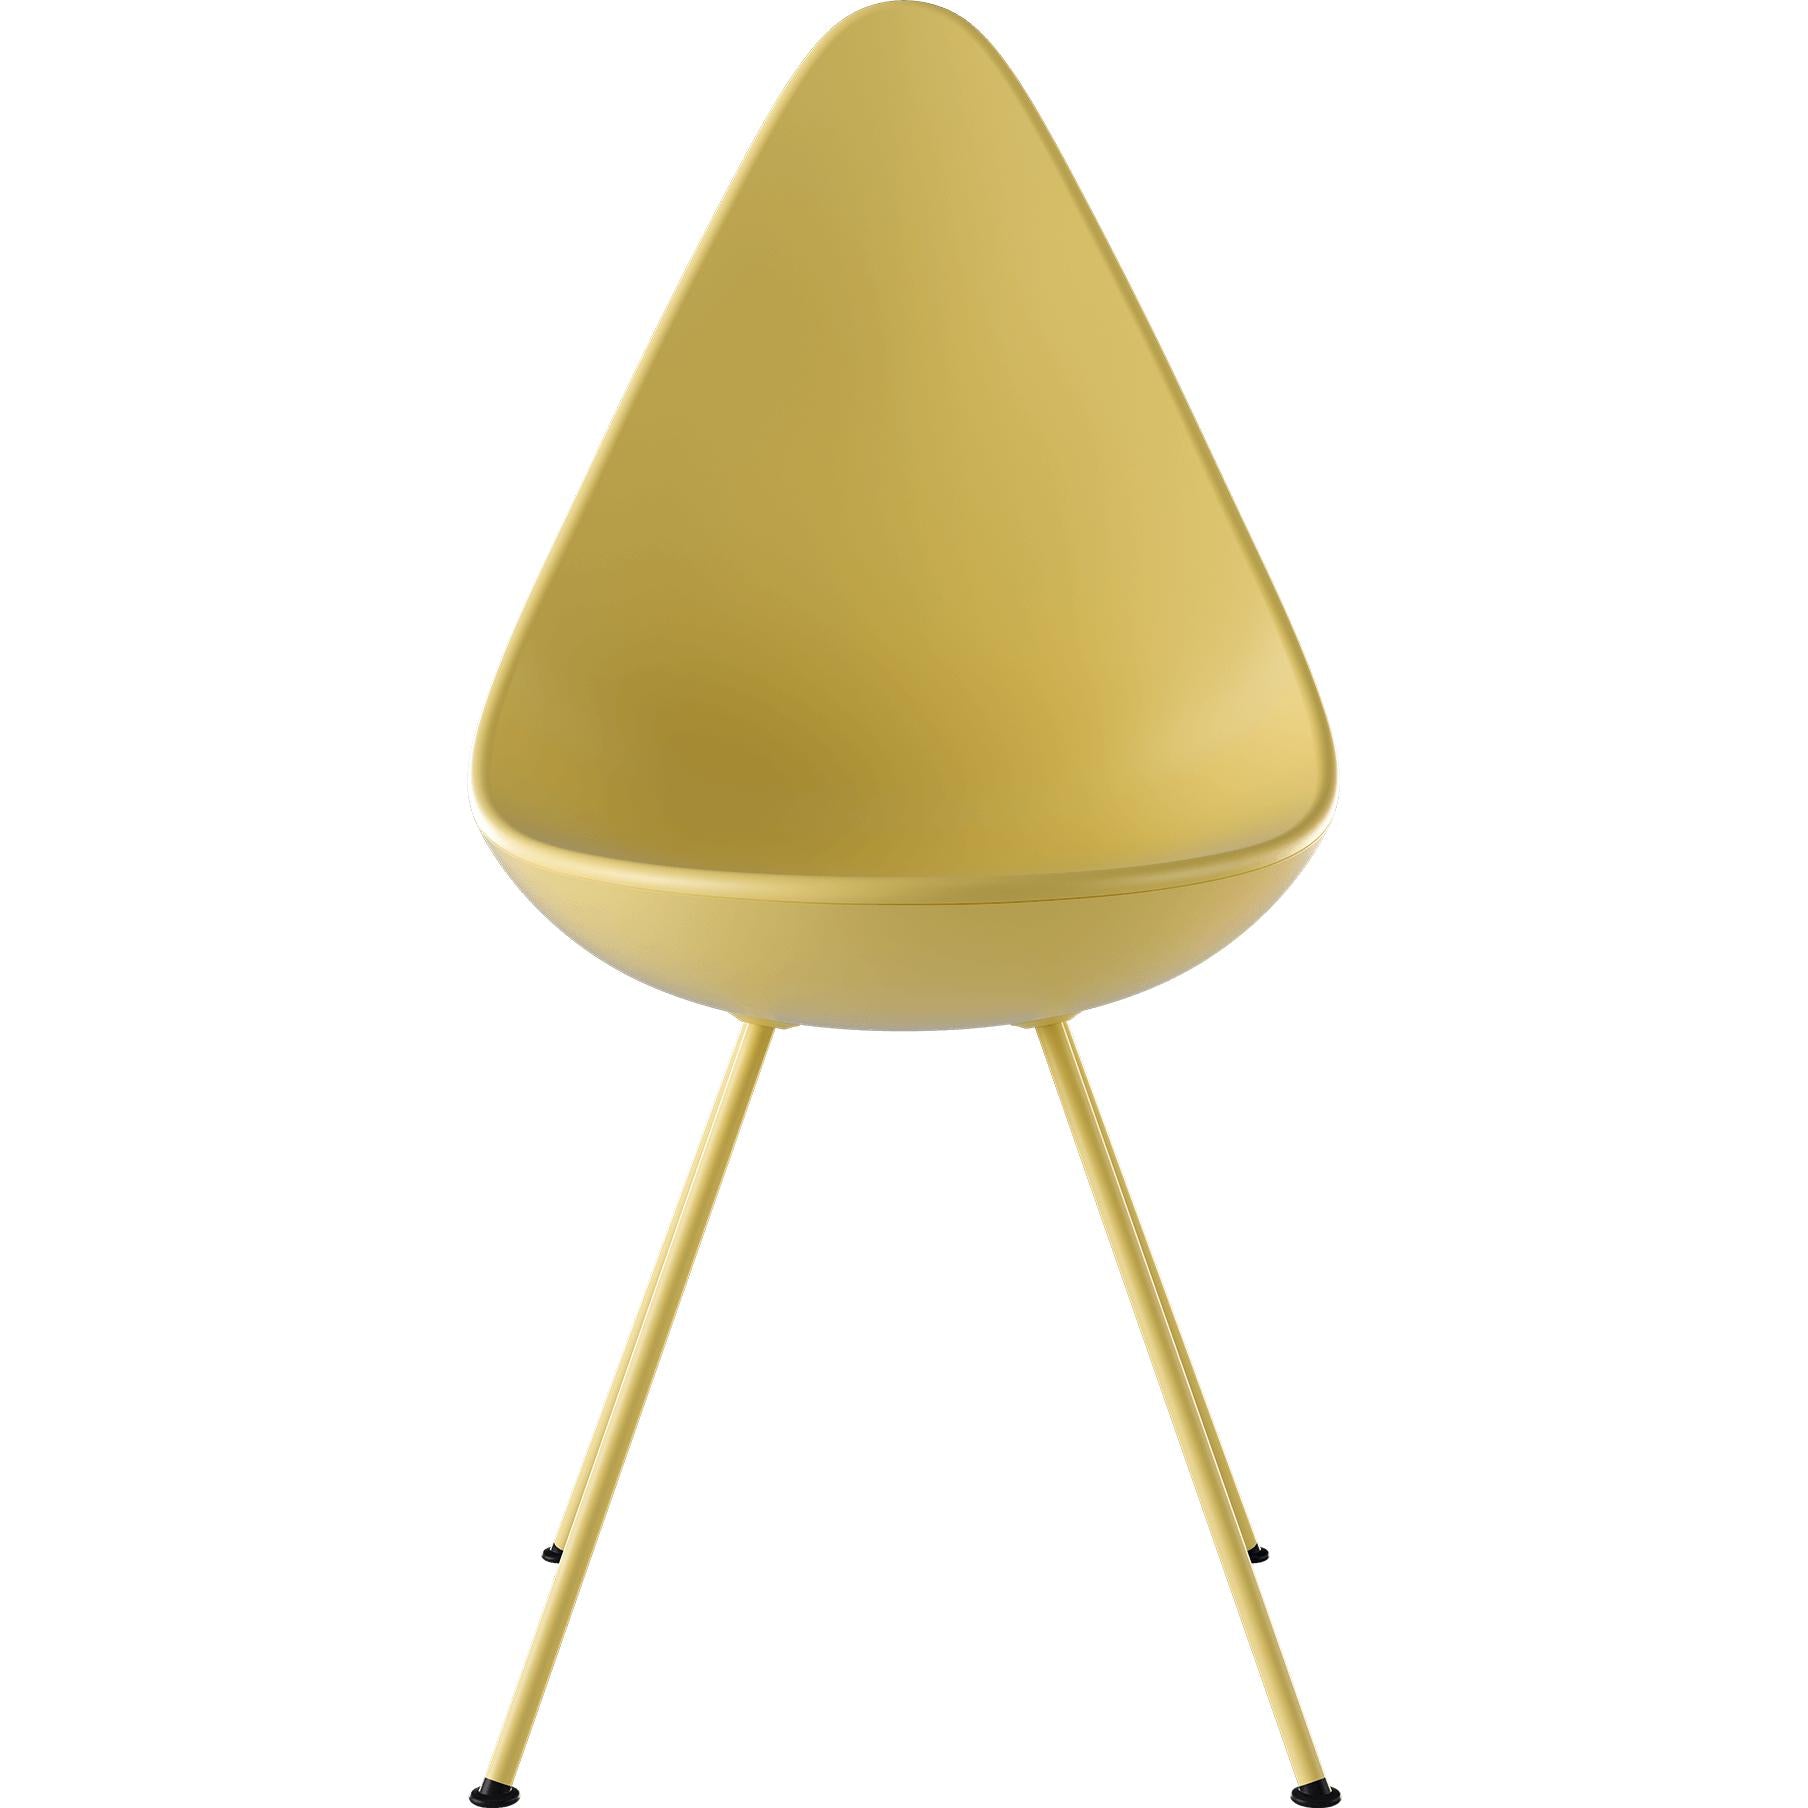 Fritz Hansen The Drop Chair Plastic Monochrome, Gen Z Yellow